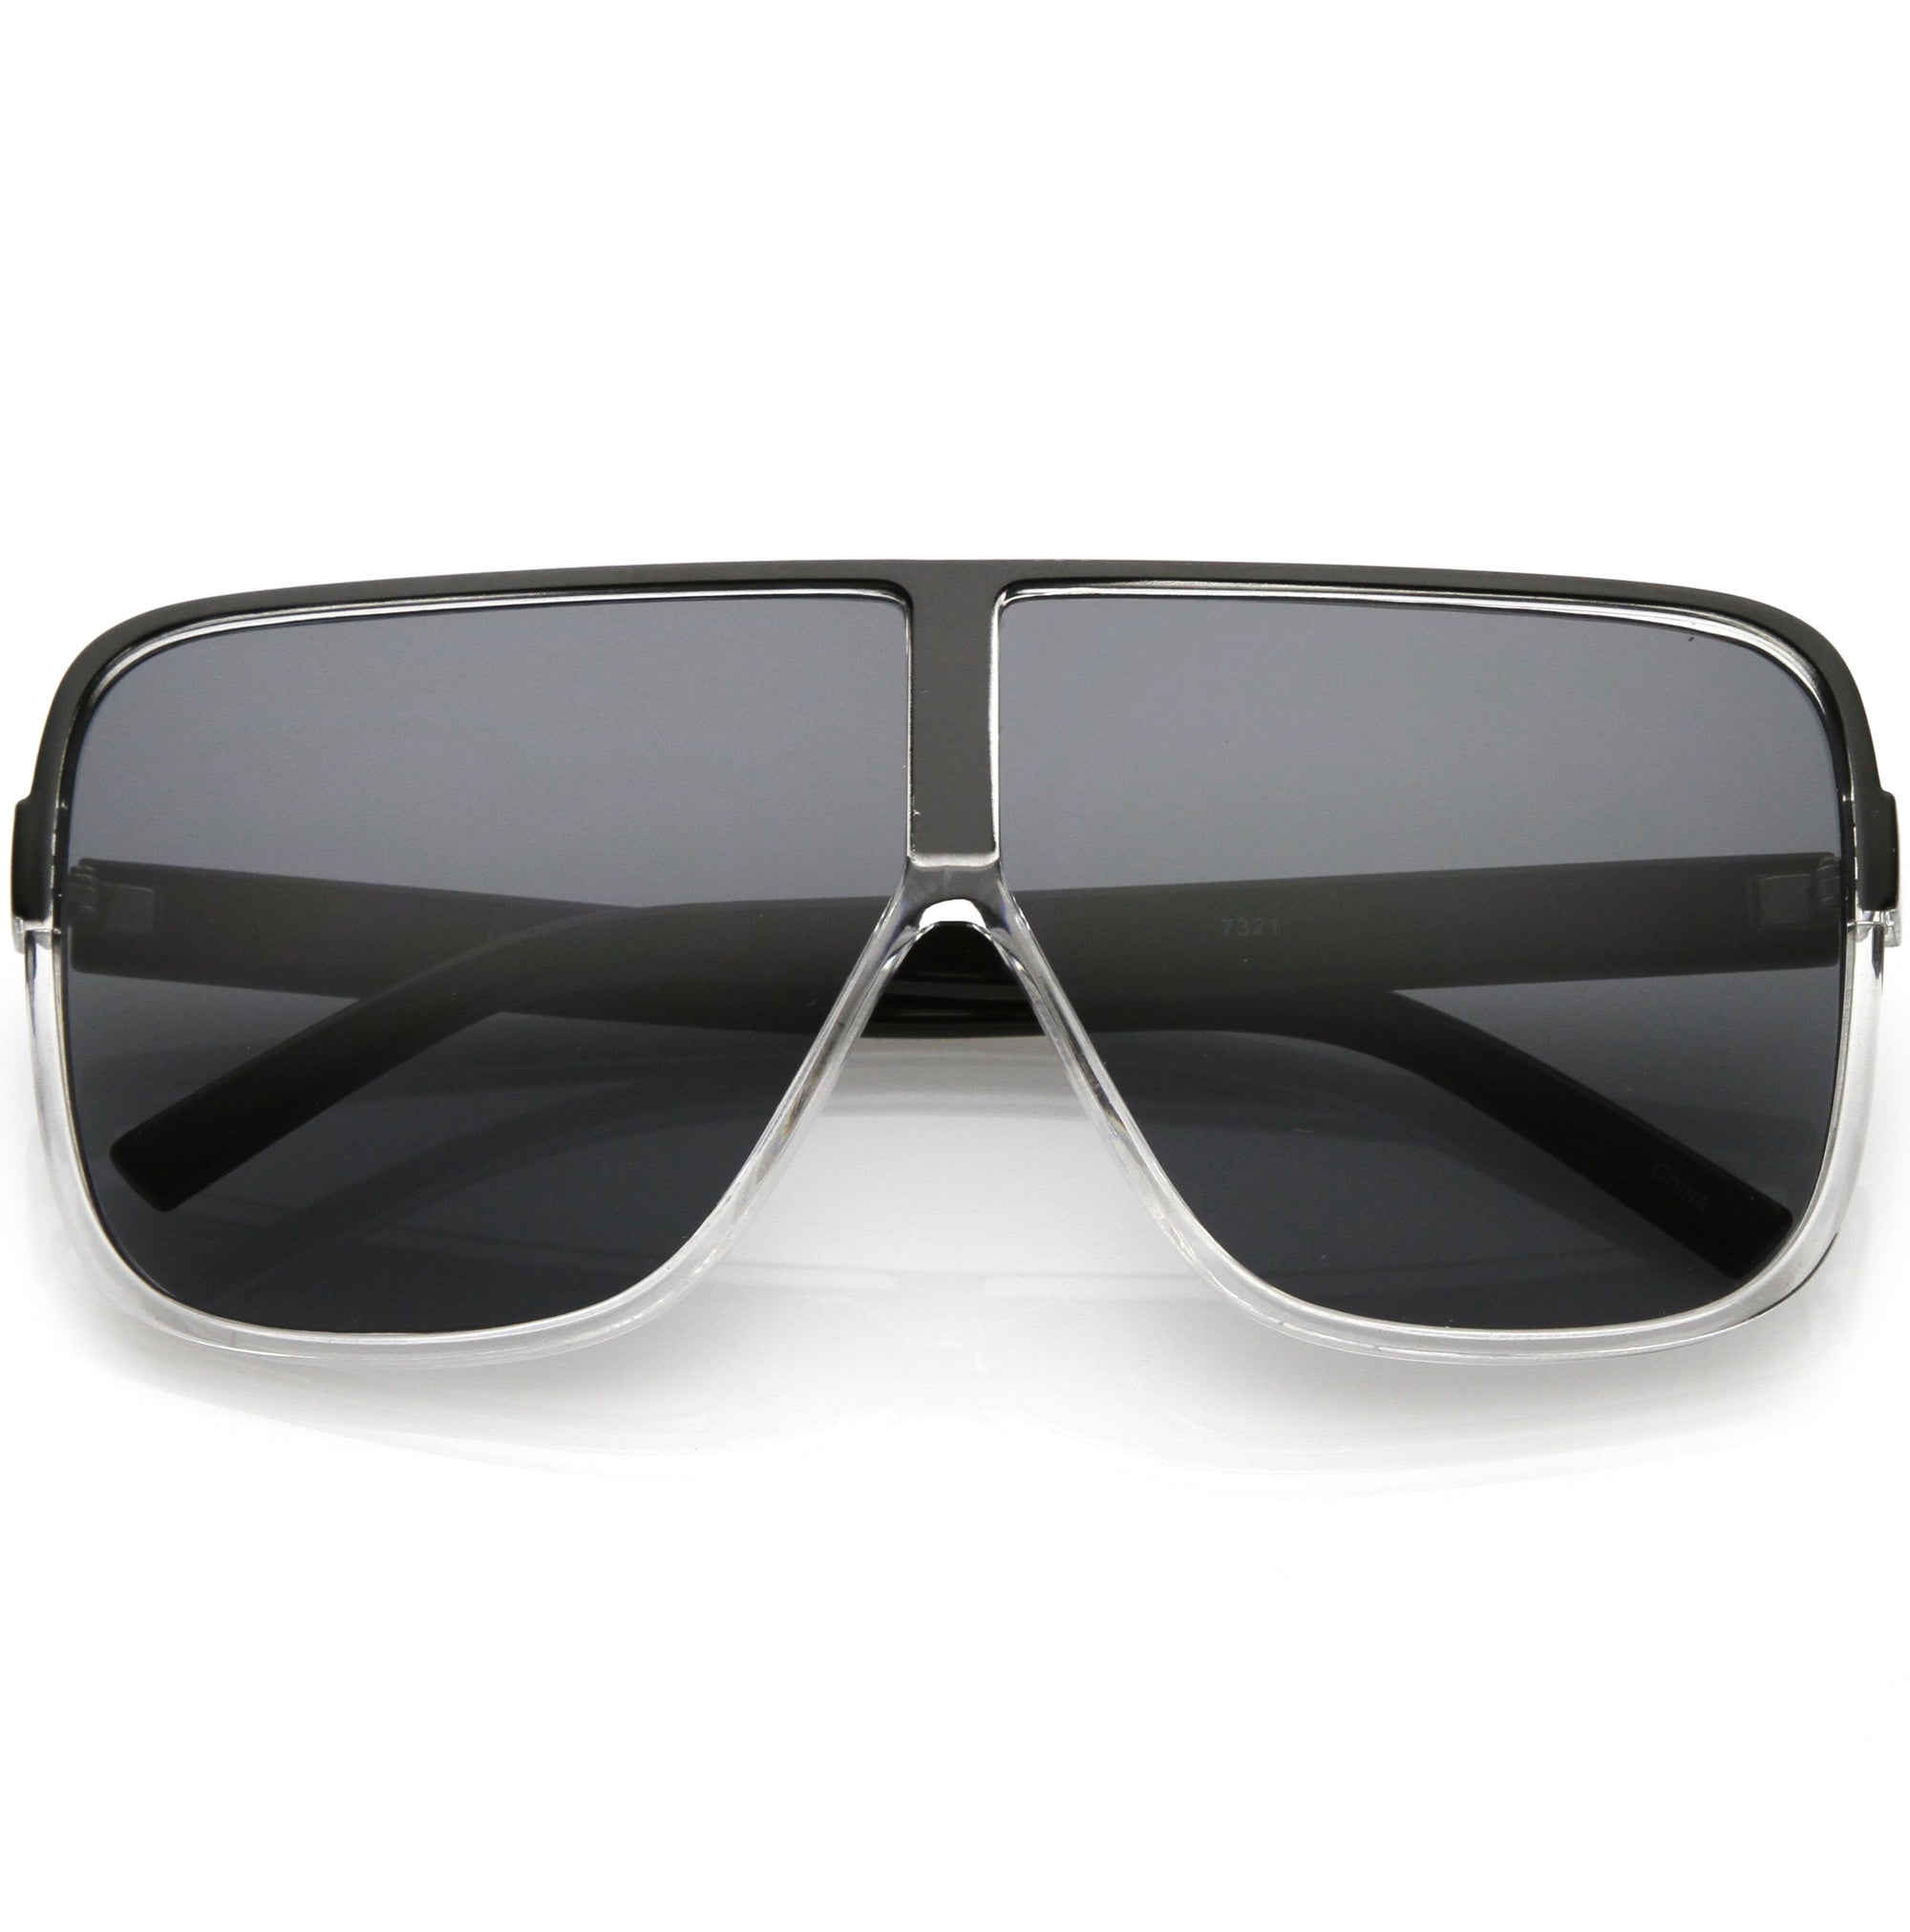 Retro Modern Oversize Square Flat Top Sunglasses C476